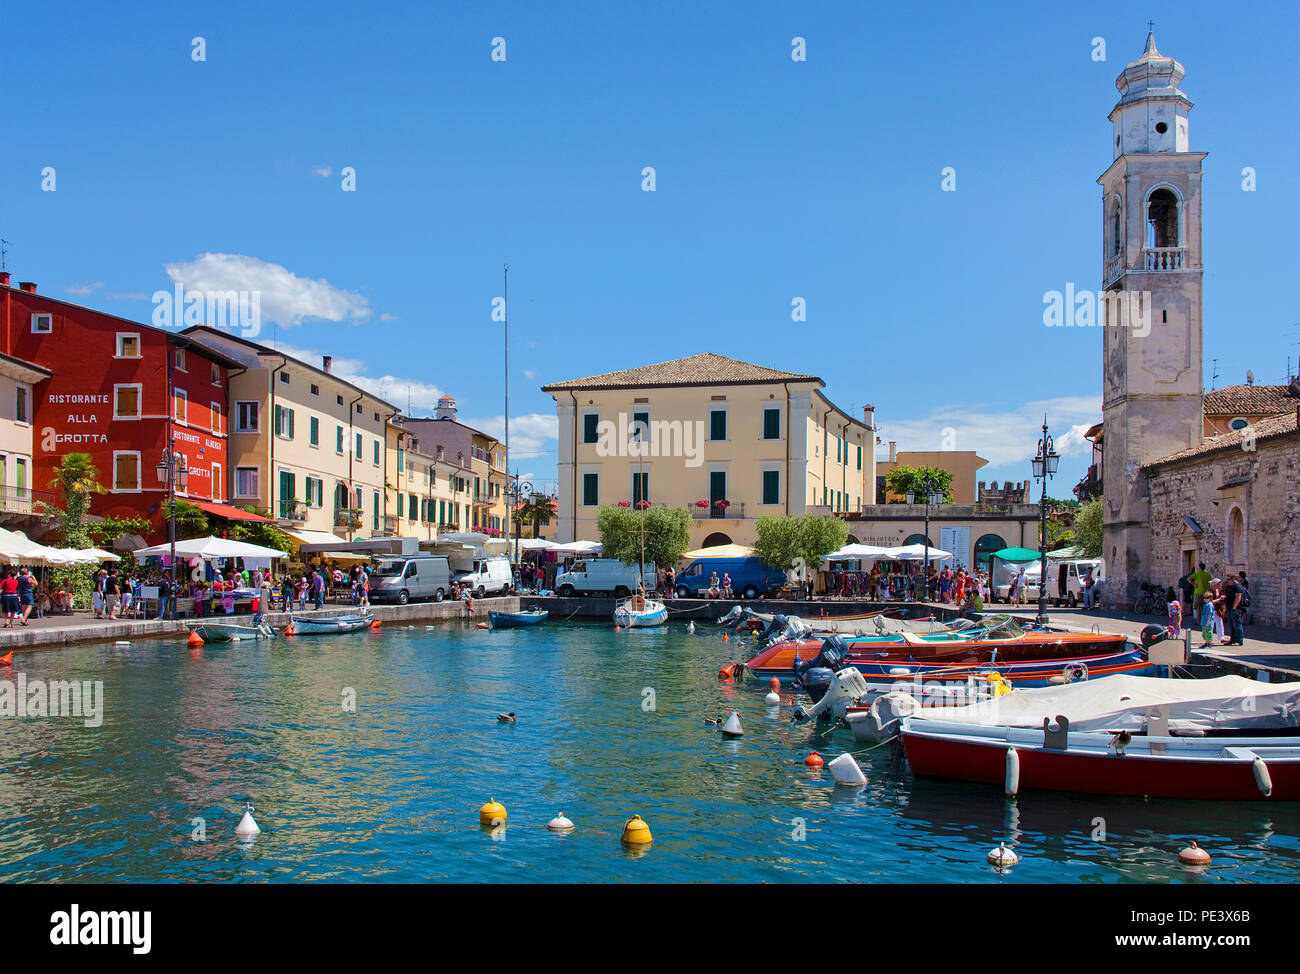 Boats at the harbour, San Nicolo church, Lazise, Garda lake, province Verona, Italy Stock Photo